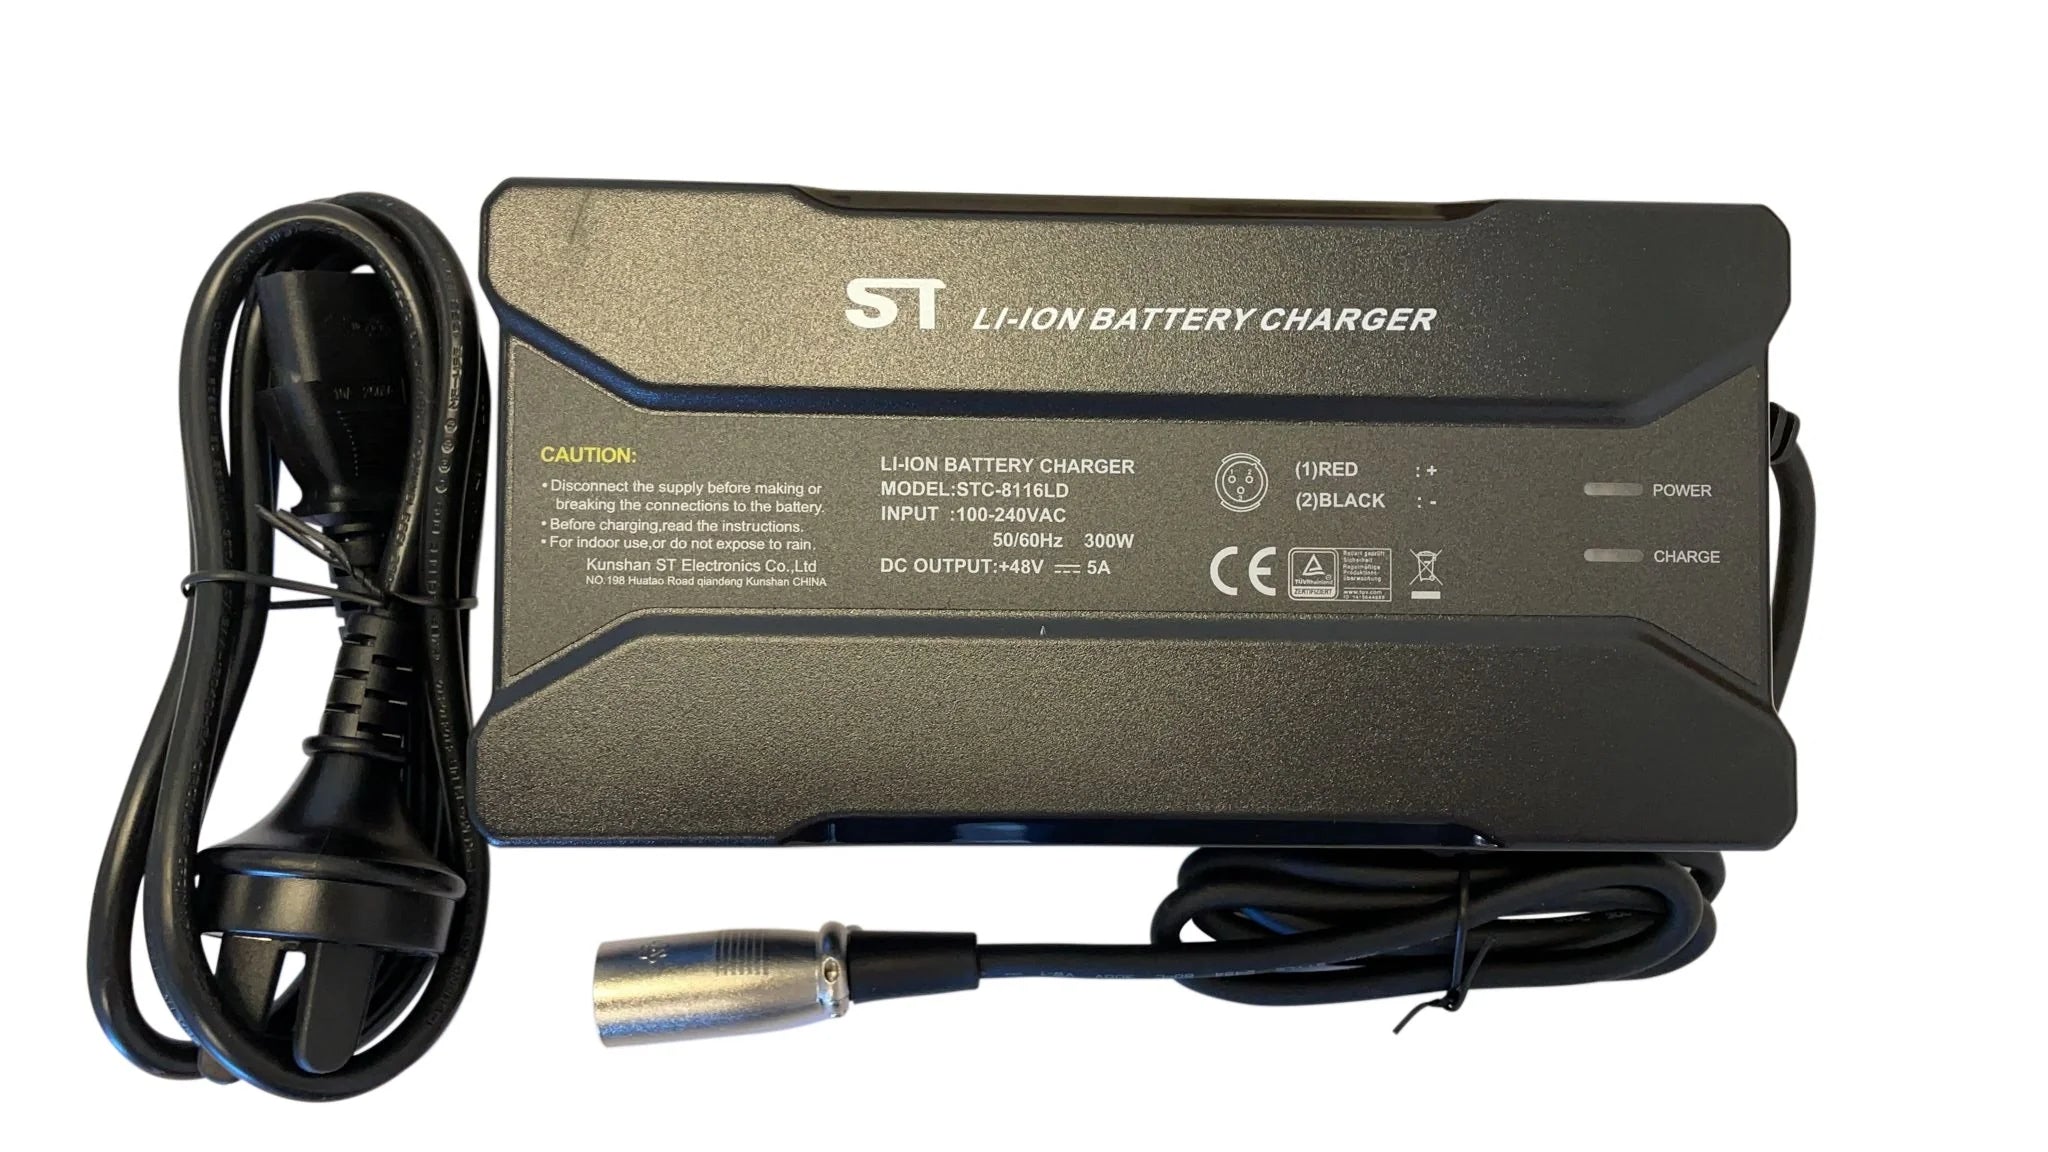 58.8V for 52V 5A e-bike Battery DC2.1 Plug / XLR Plug Charger